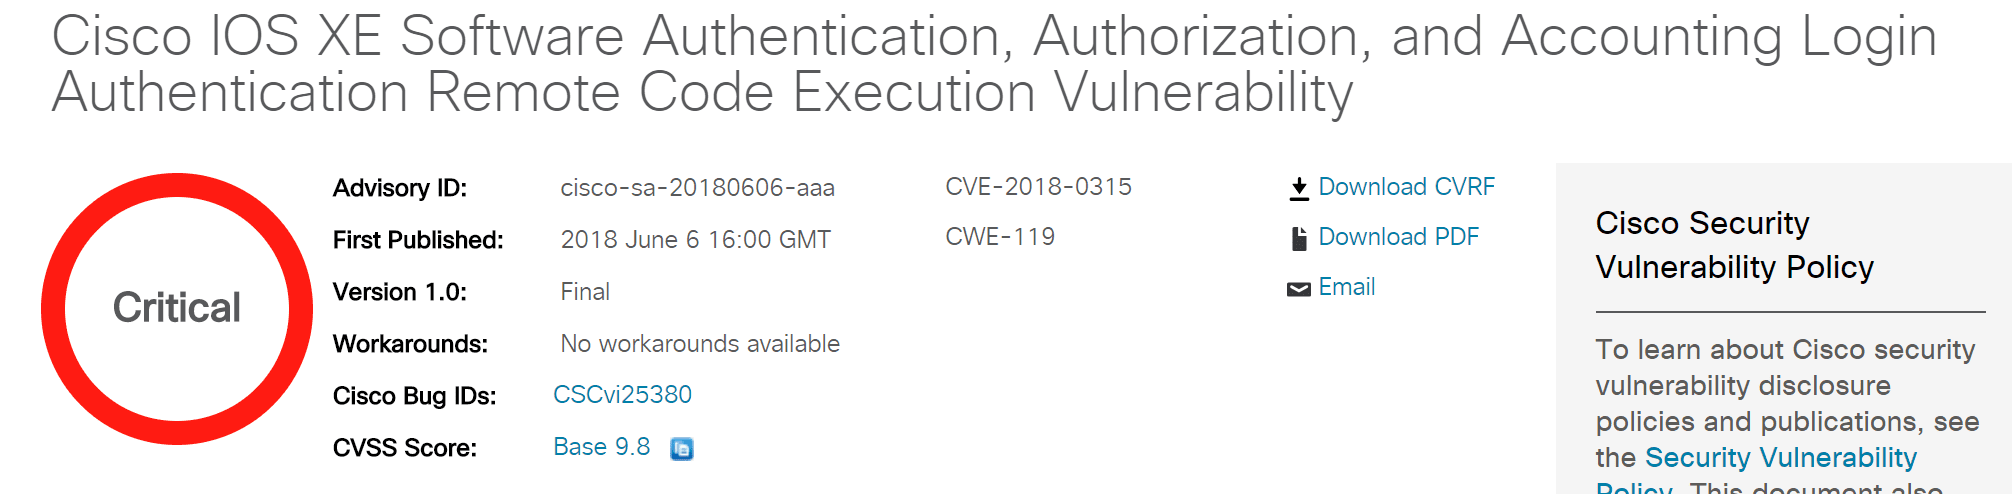 cisco ios xr software denial of service vulnerability